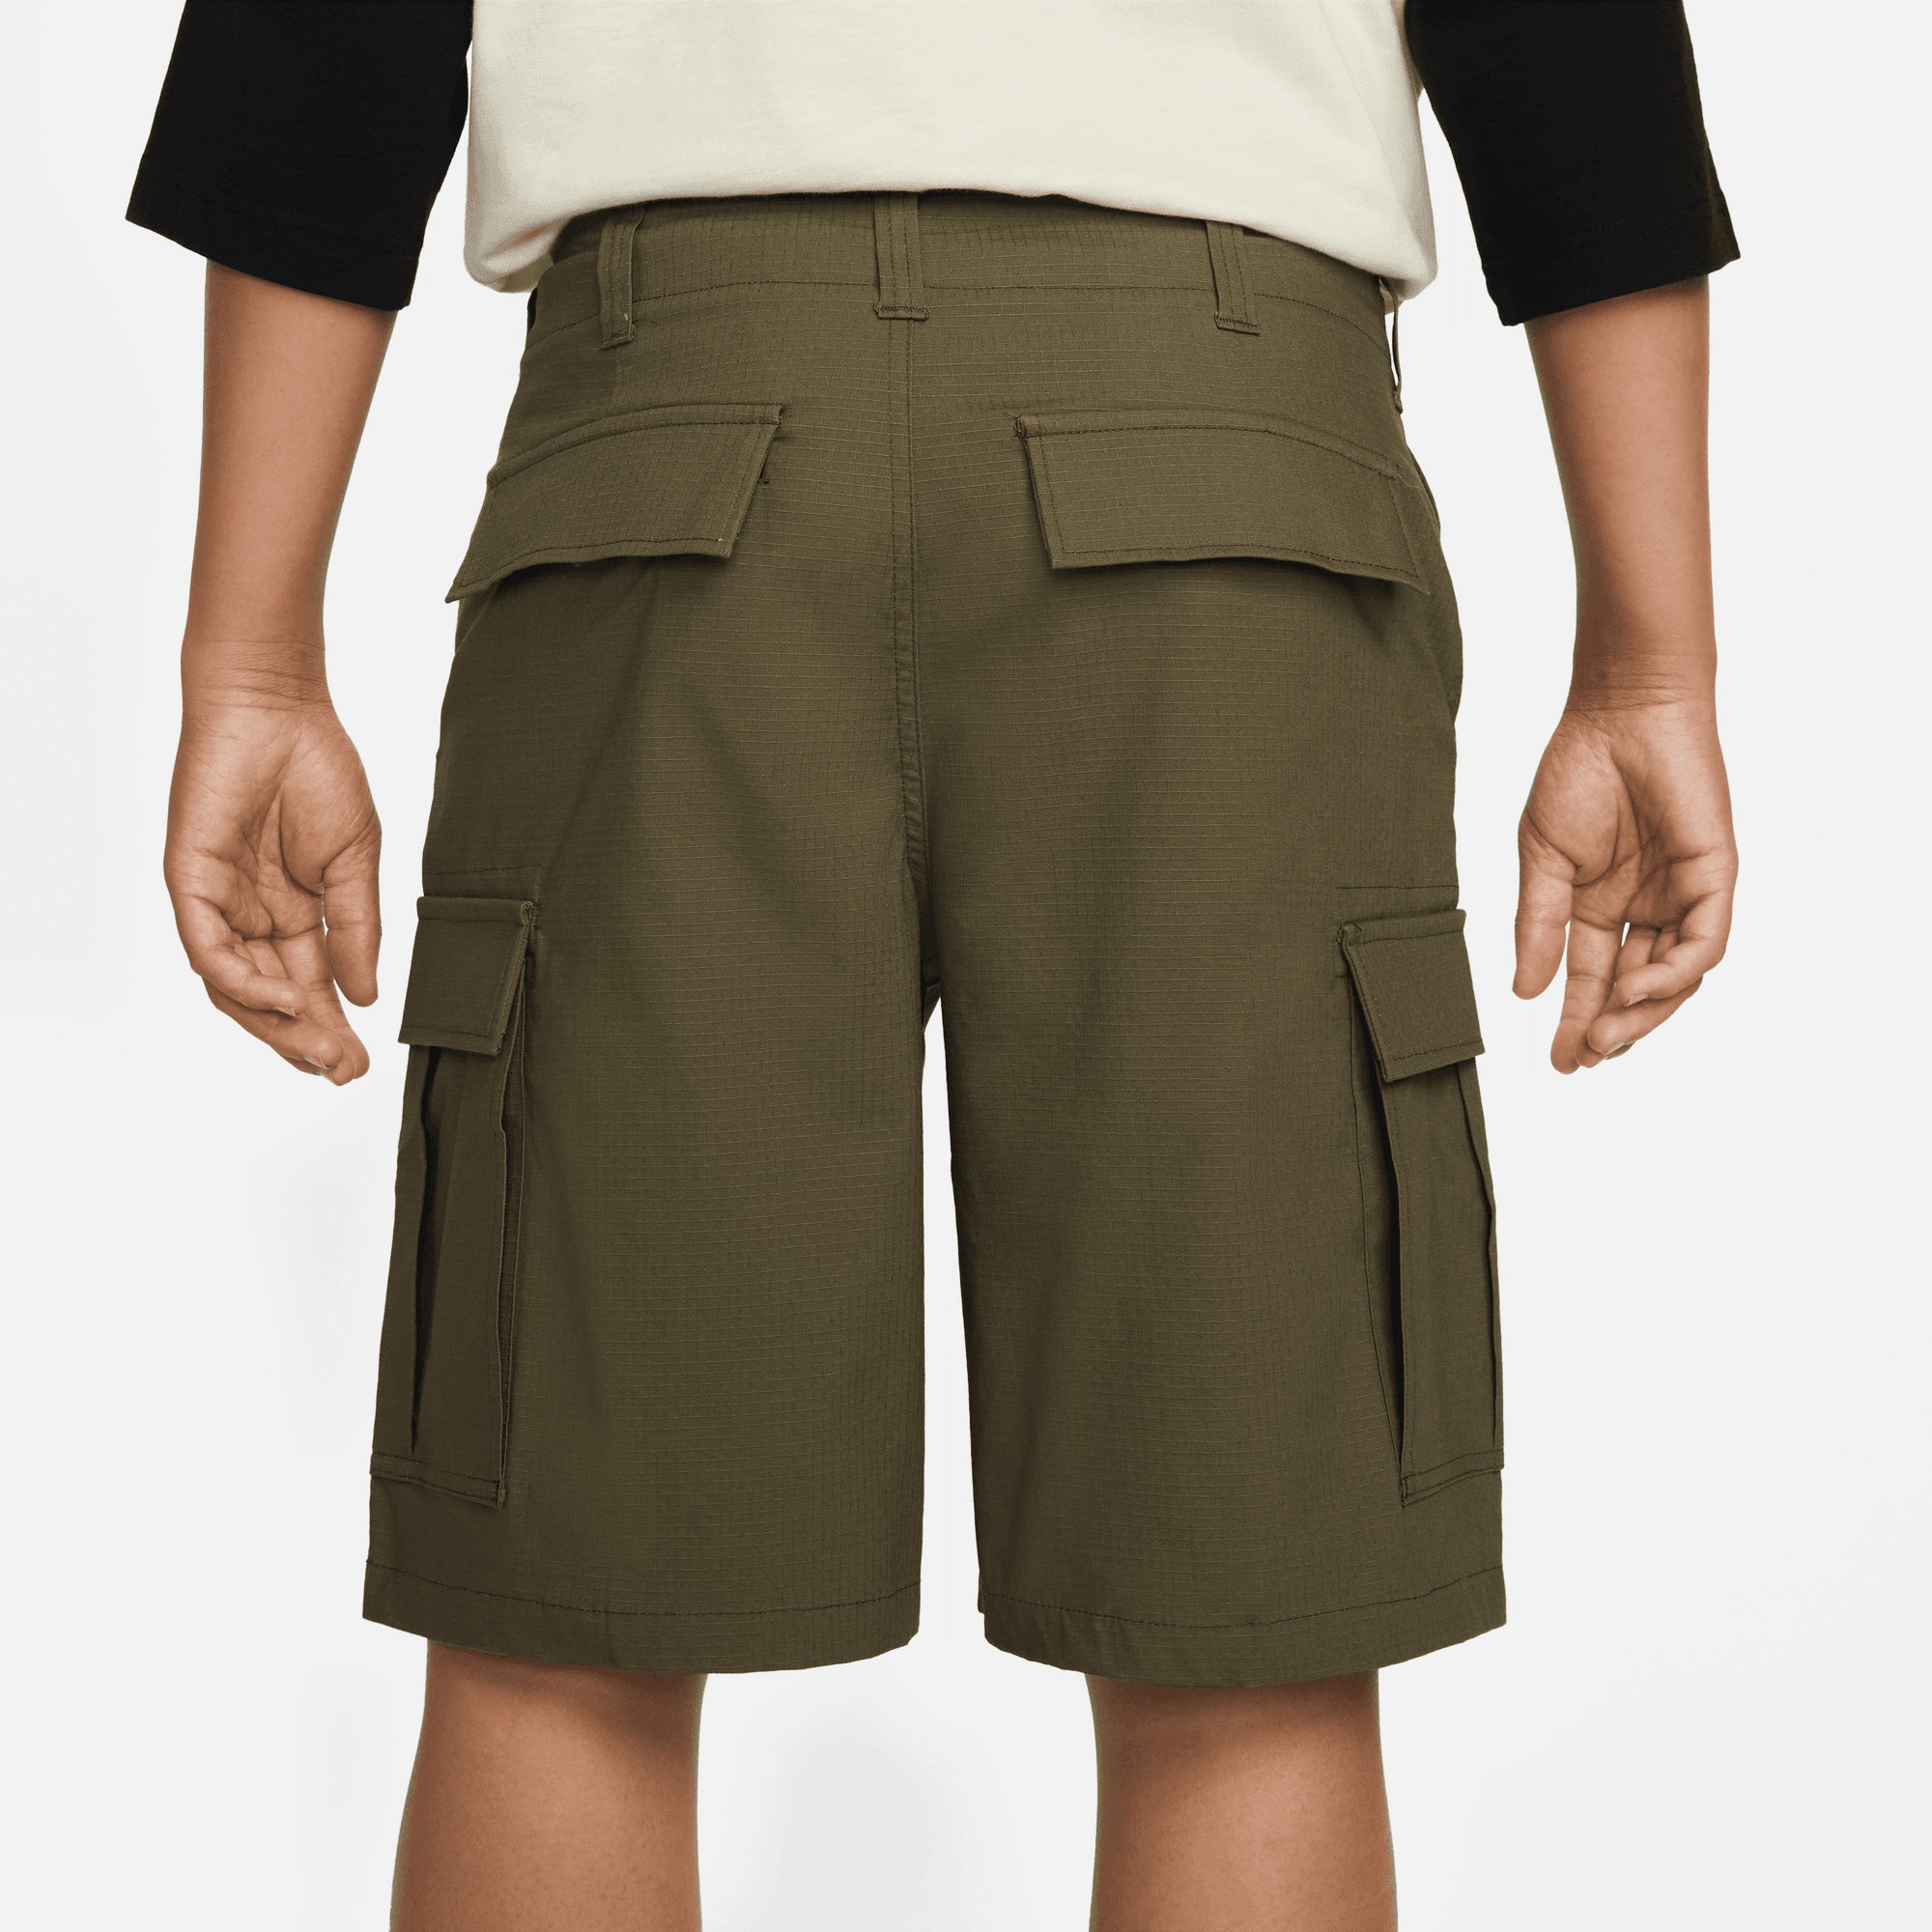 Nike SB Cargo Ripstop Shorts - Medium Olive/White